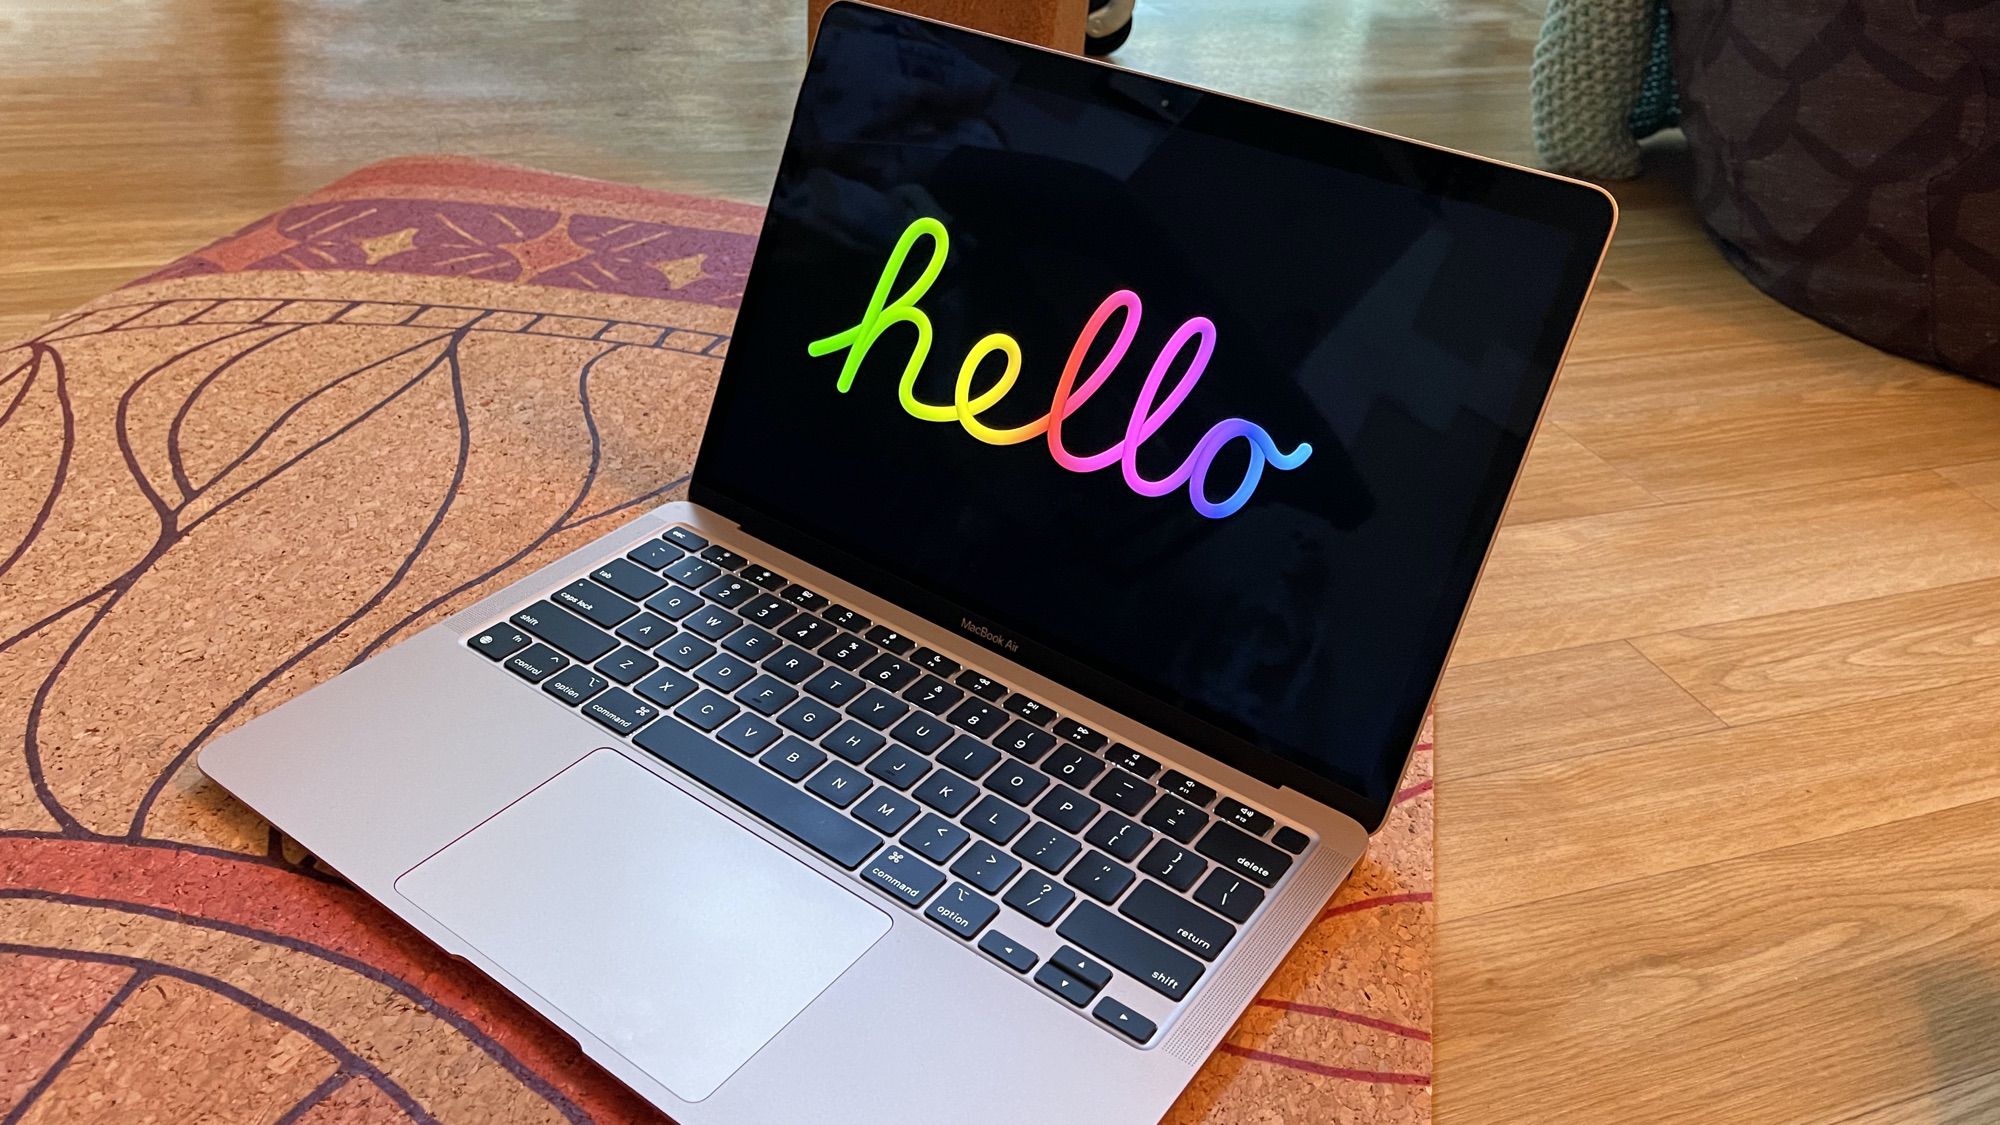 Apple adds new ‘Hello’ screensaver in macOS Big Sur 11.3